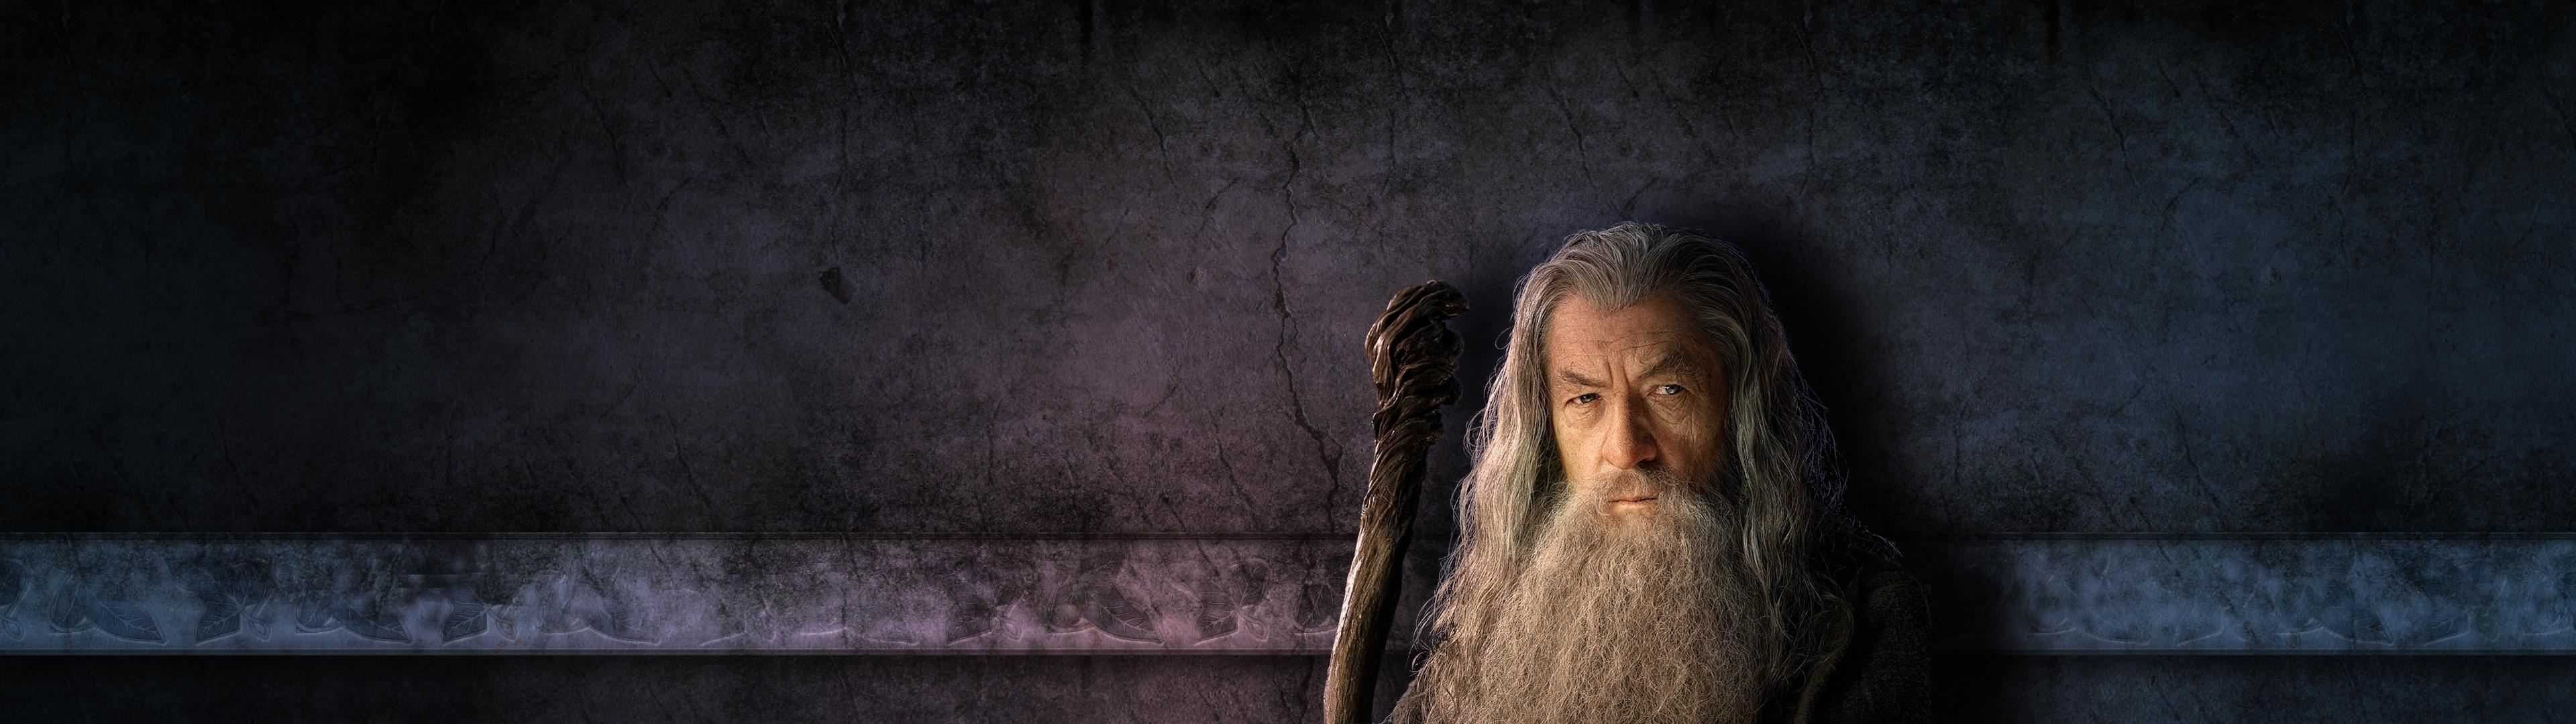 Lord of the Rings Gandalf wallpaper, Stylish design, Eye-catching visuals, Desktop background, 3840x1080 Dual Screen Desktop